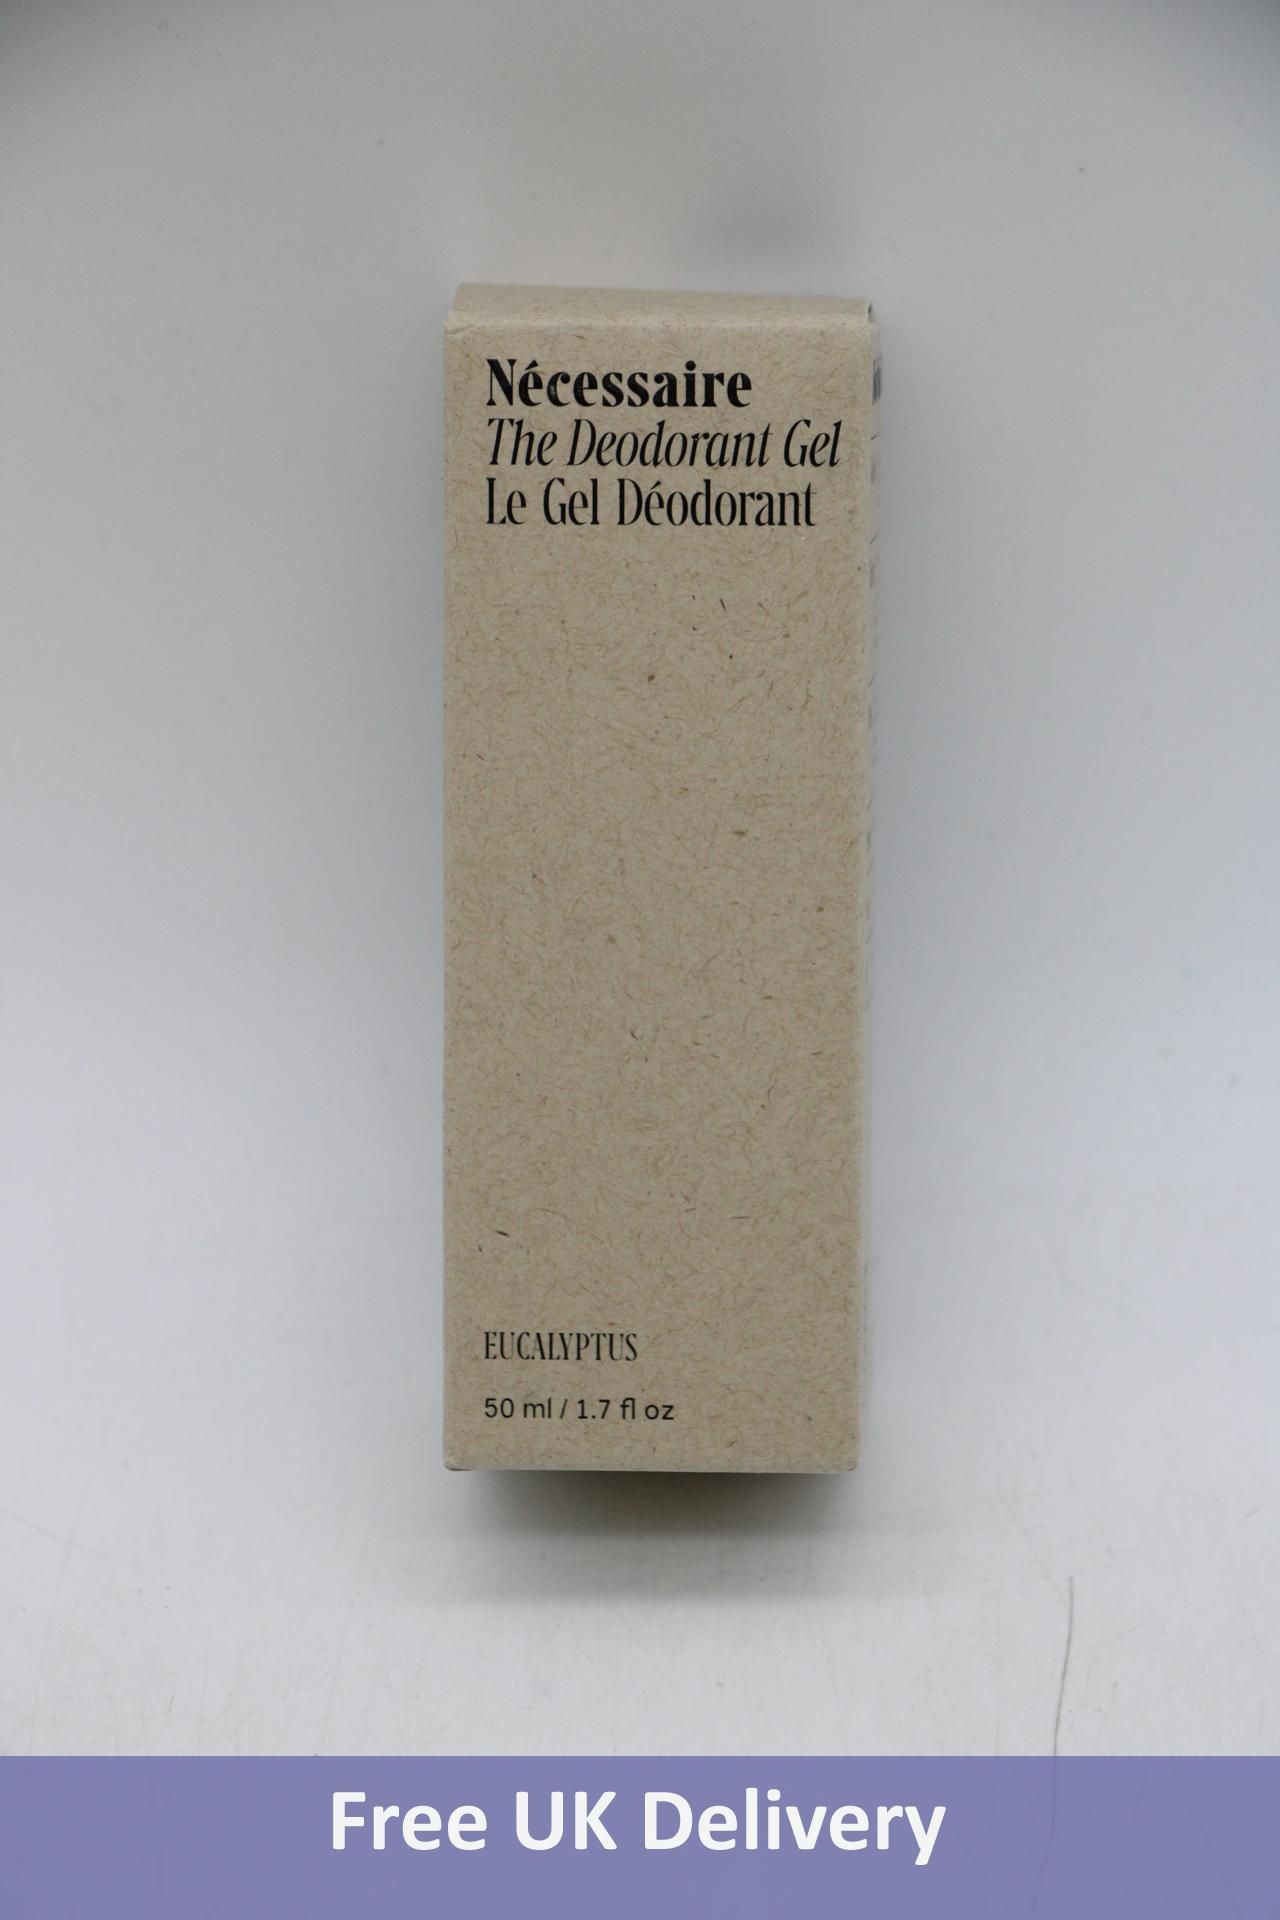 Fifteen bottles of Necessaire The Deodorant Gel Eucalyptus, Lime Green, Size 50ml - Image 4 of 5